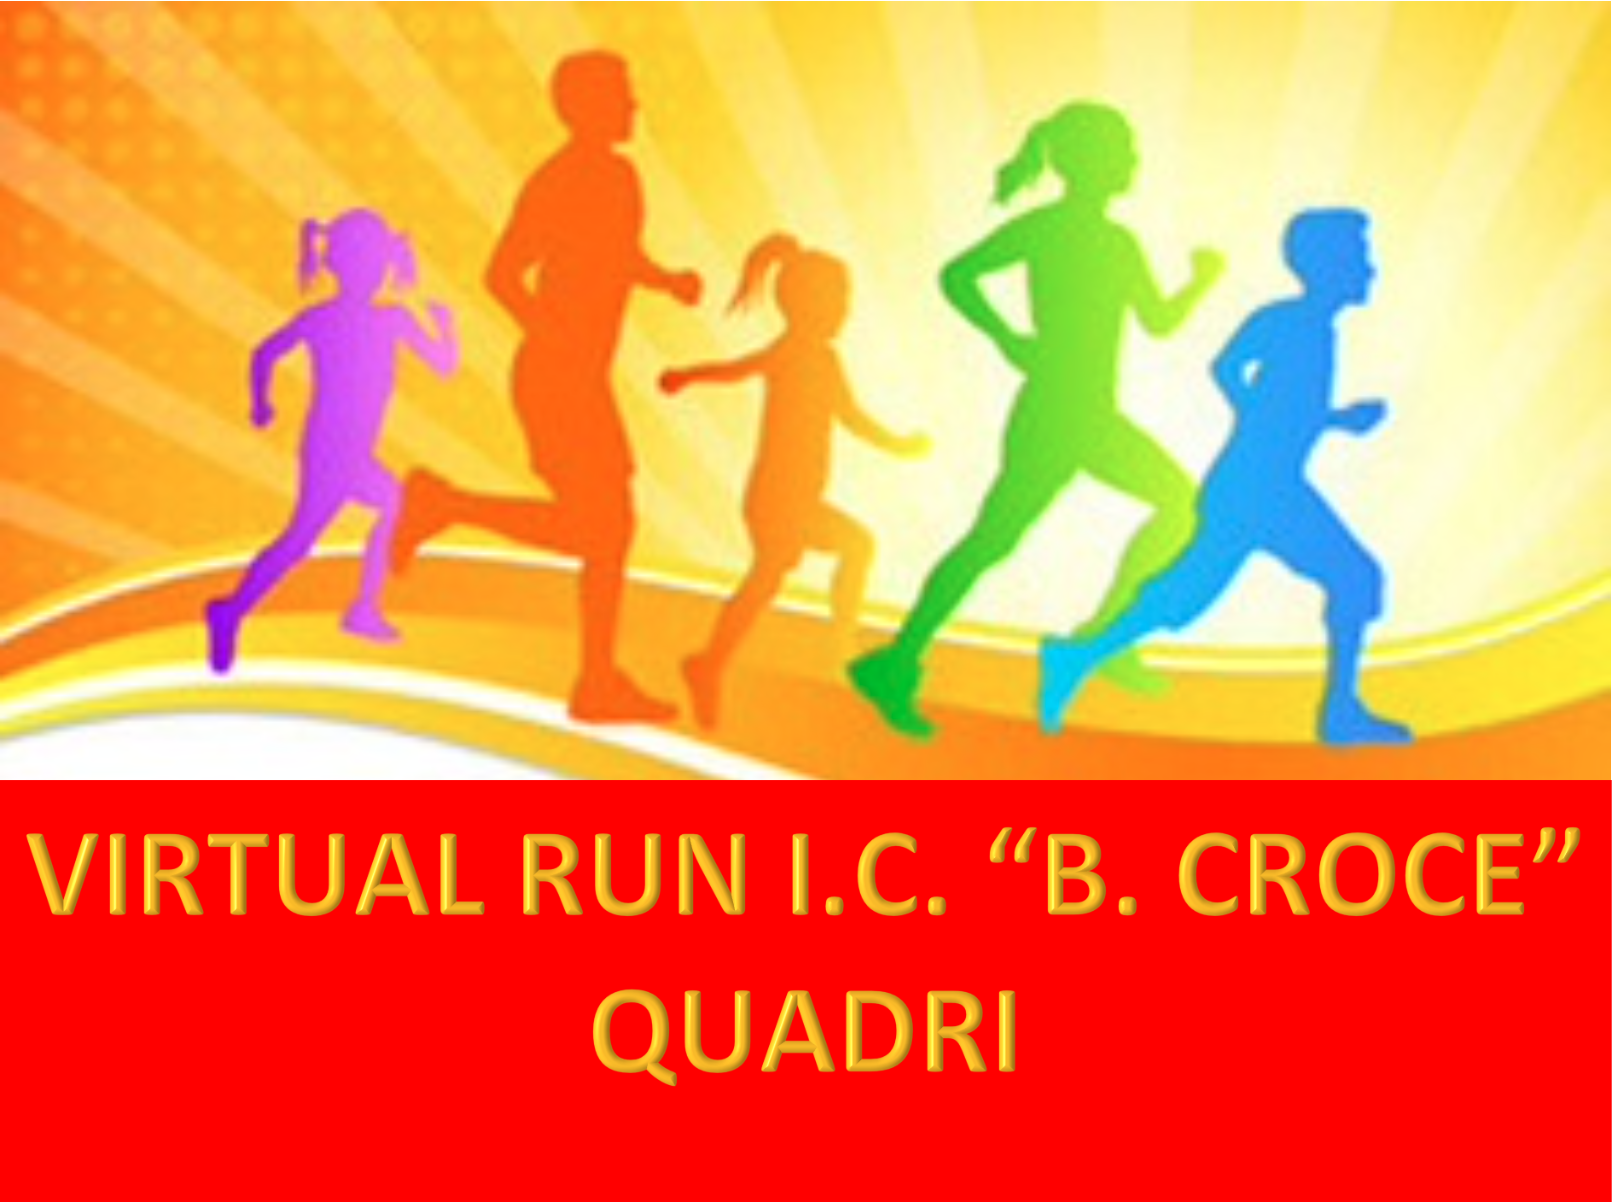 VIRTUAL RUN I.C. "B.CROCE" QUADRI